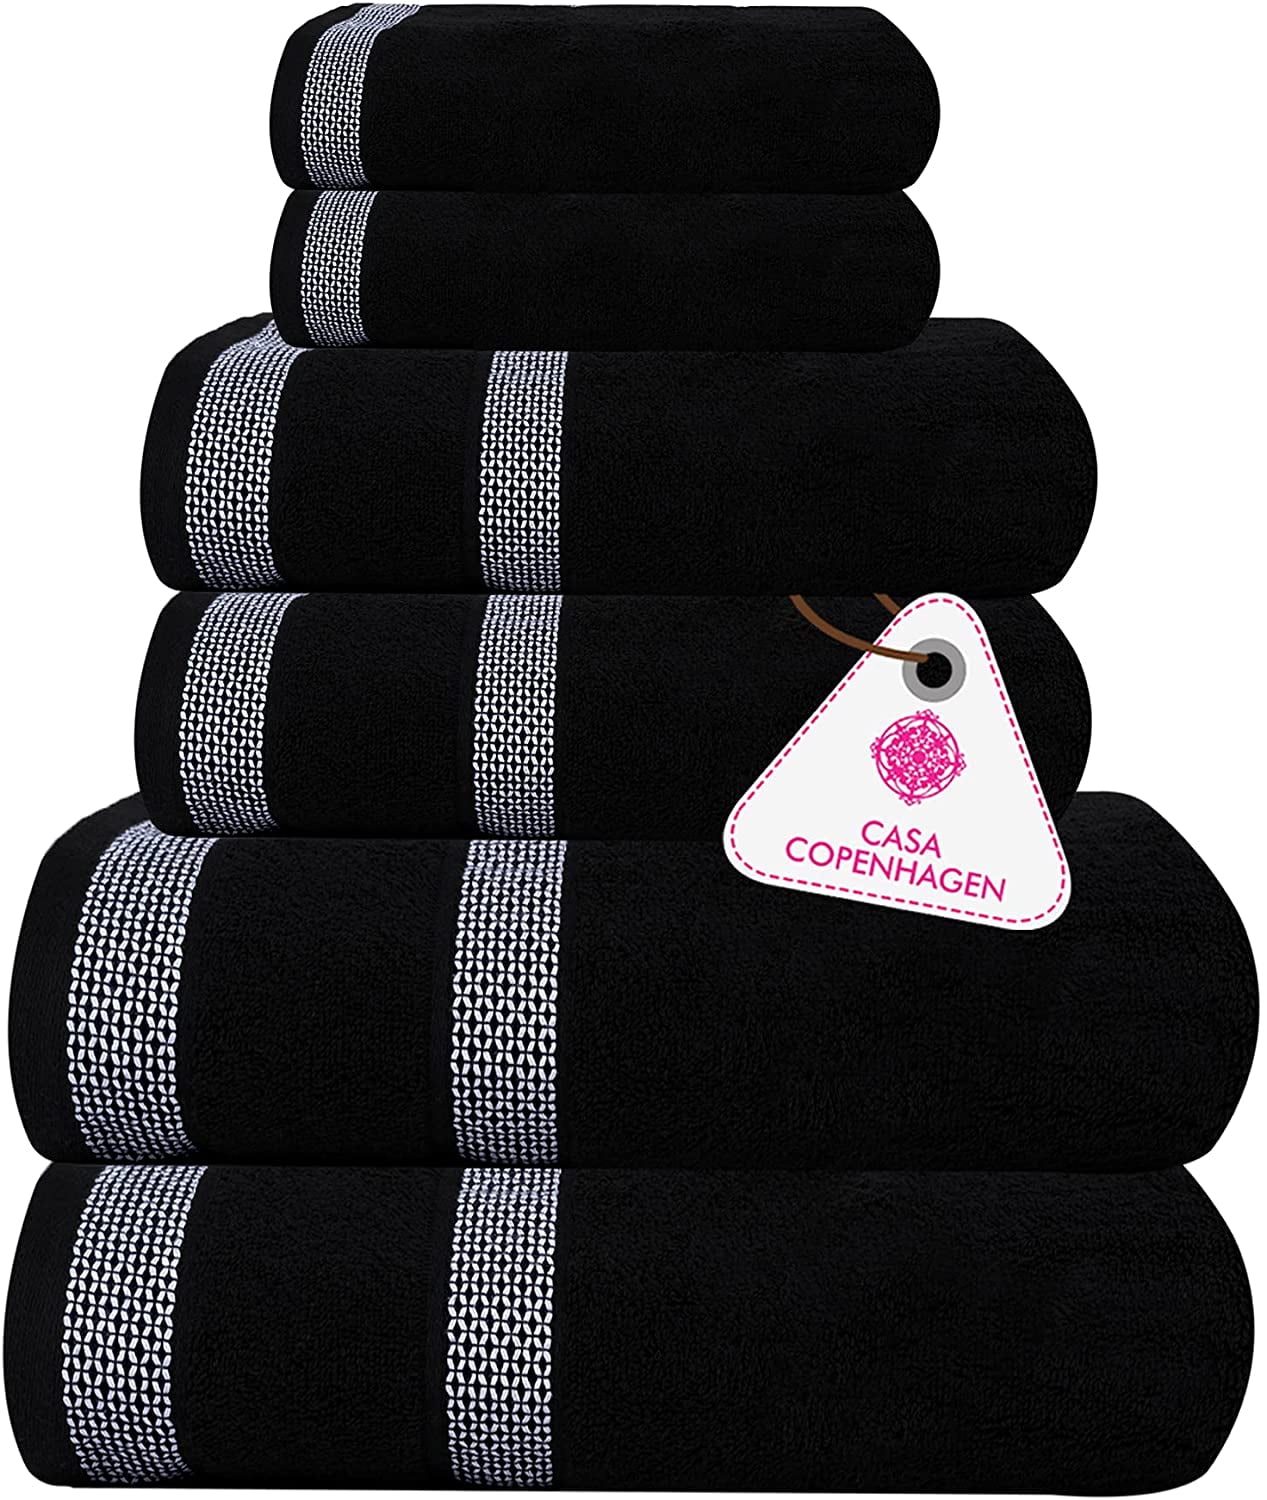 600 GSM Premium Cotton 6 Piece Hand Towel Set Lime Green Casa Copenhagen Solitaire Luxury Hotel & Spa Quality 